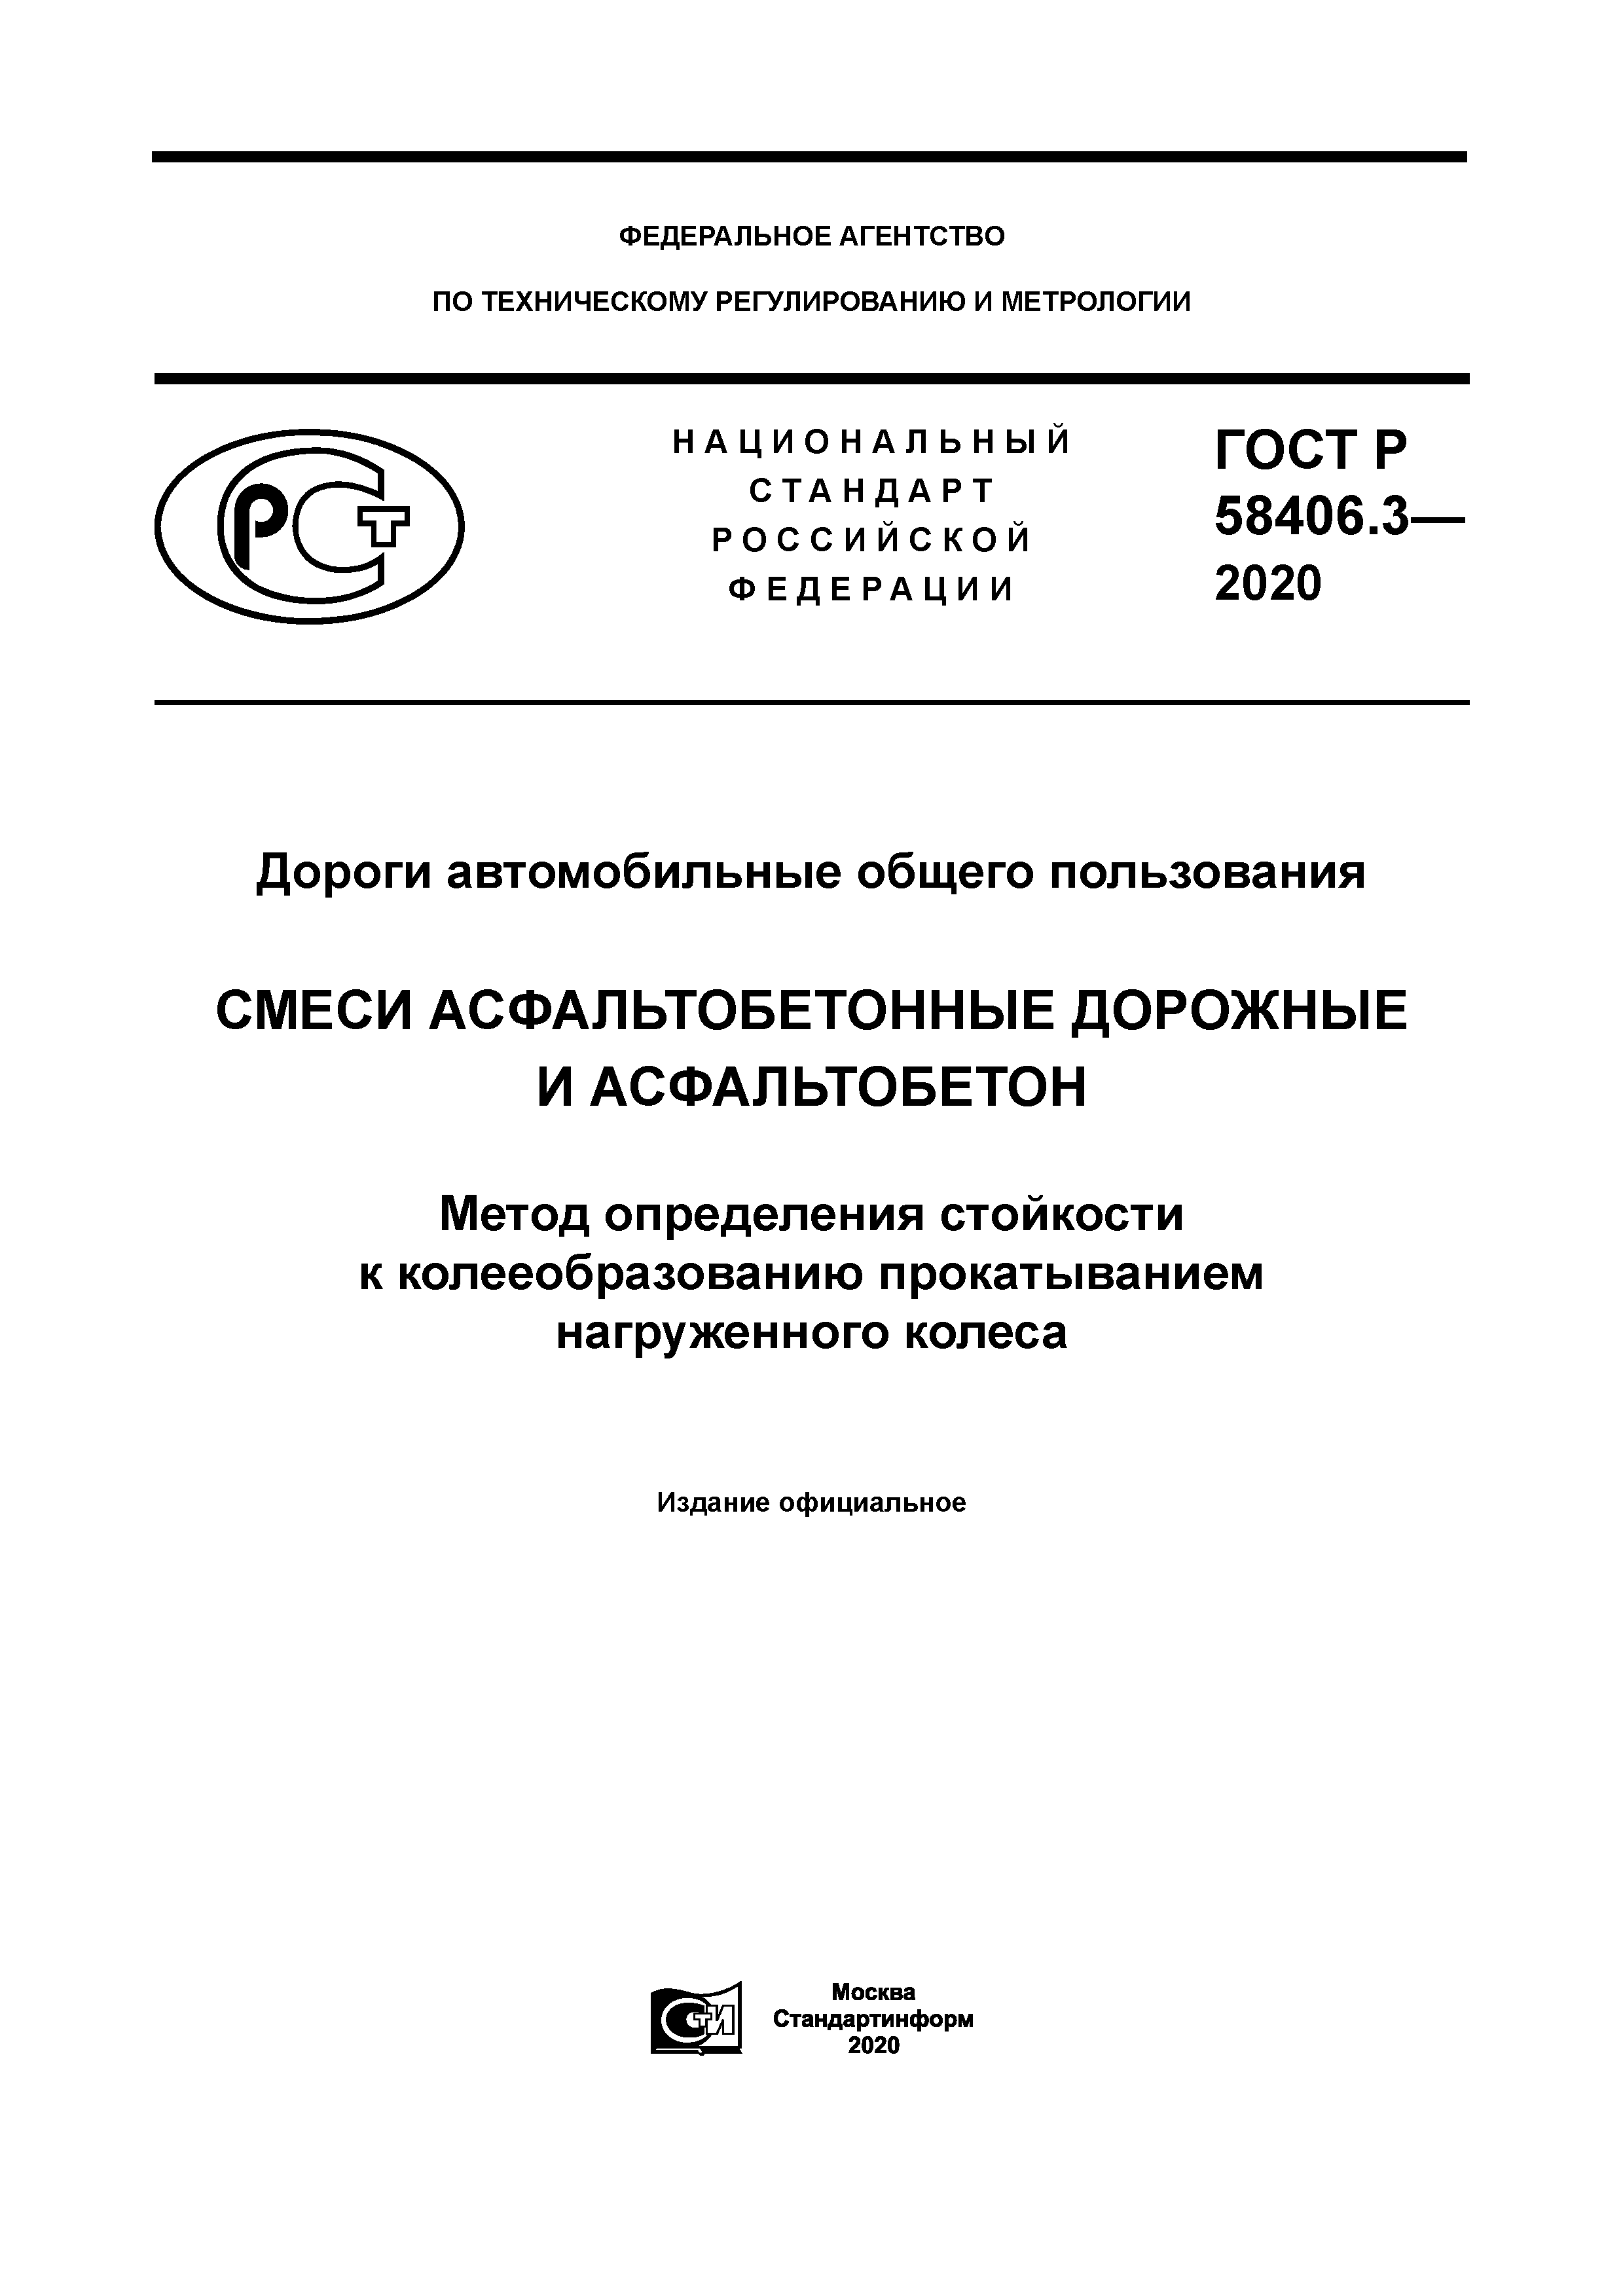 ГОСТ Р 58406.3-2020